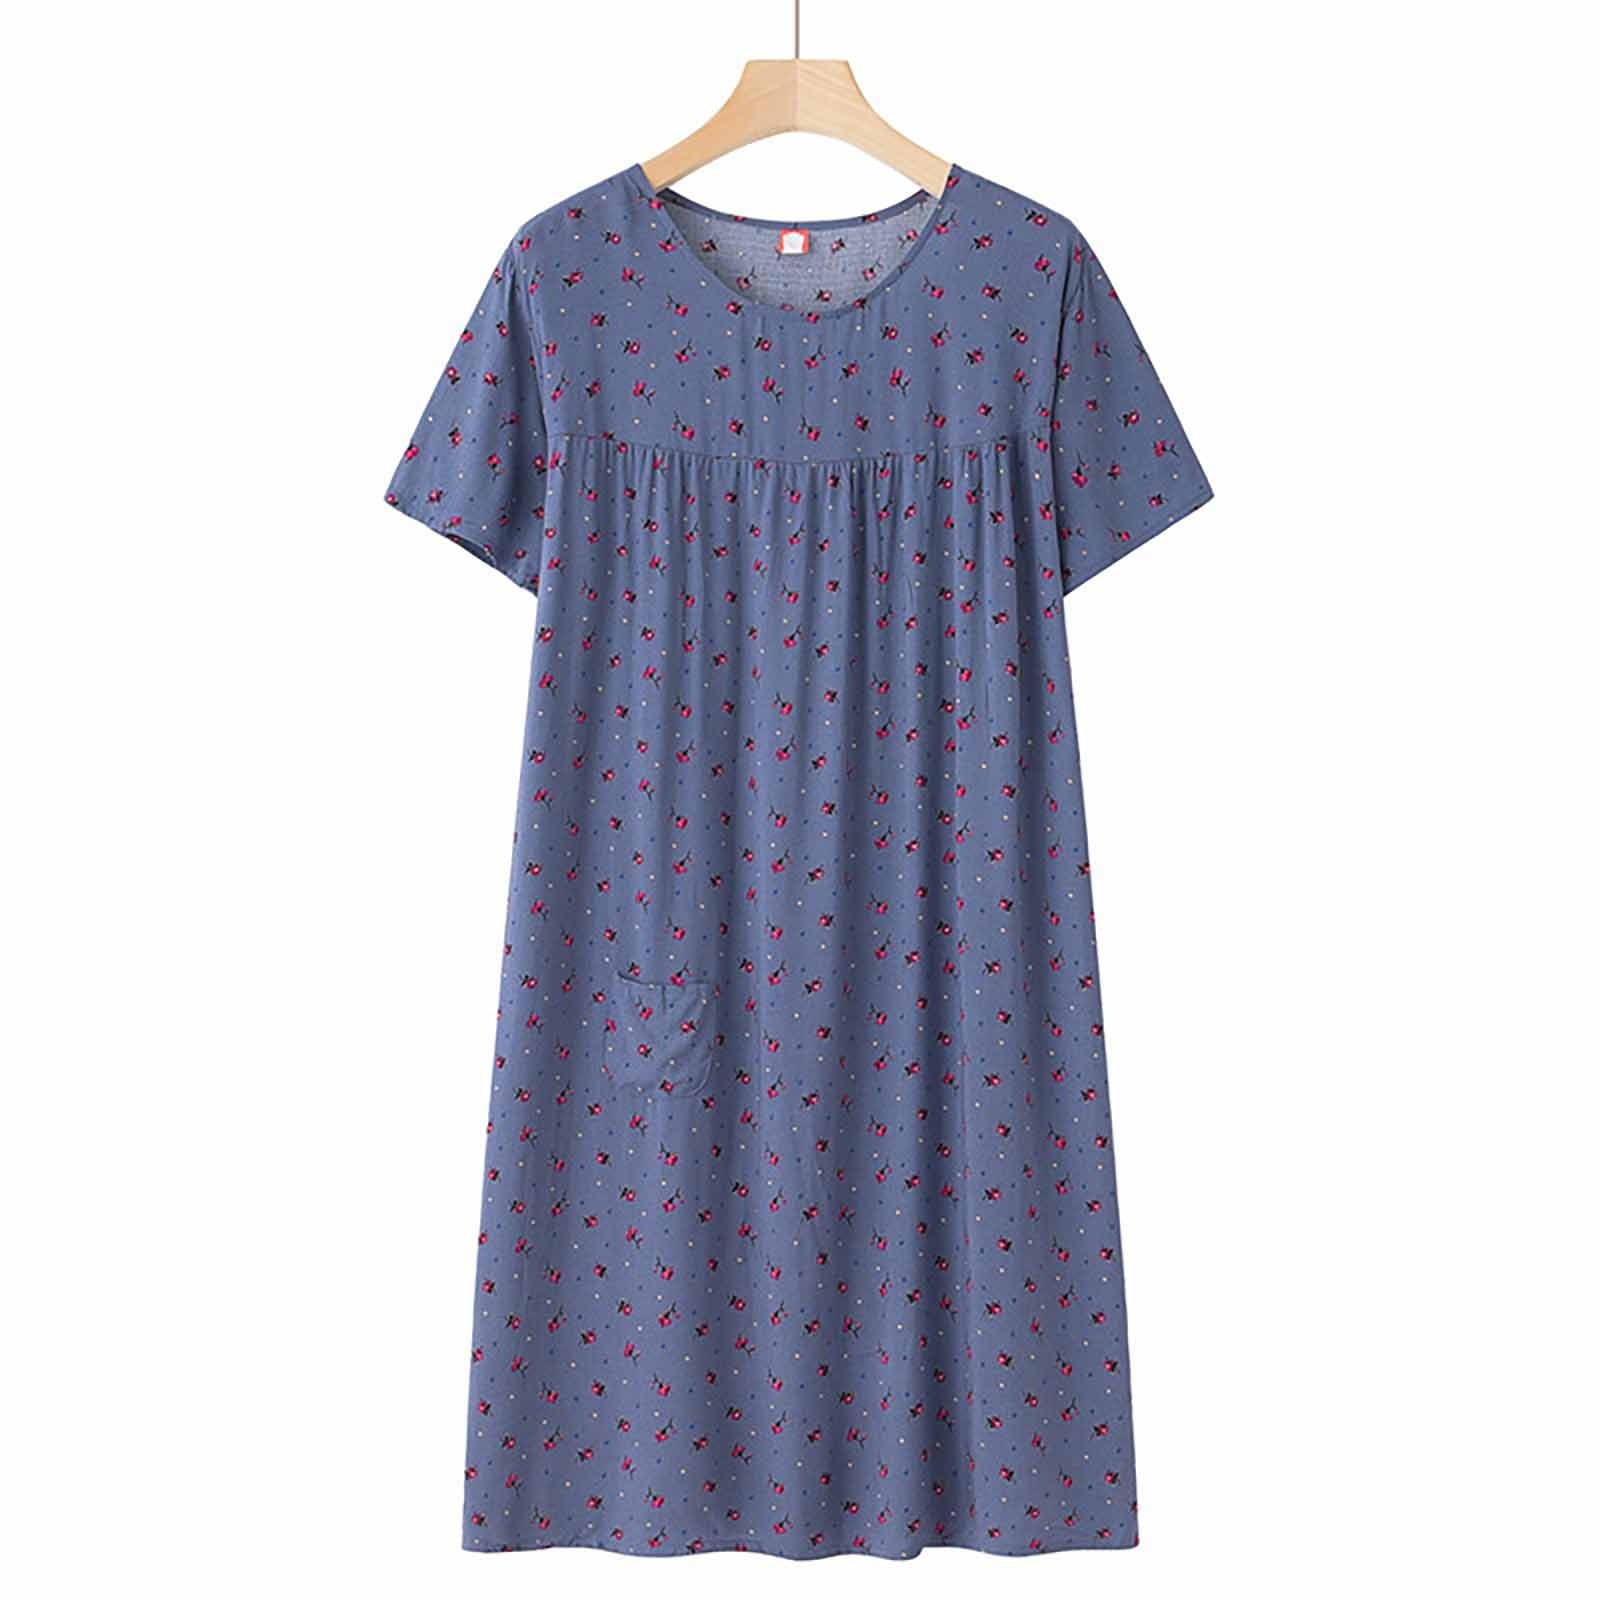 Skpblutn Nightgowns for Women Summer Cotton Silk Short Sleeved Sleep ...